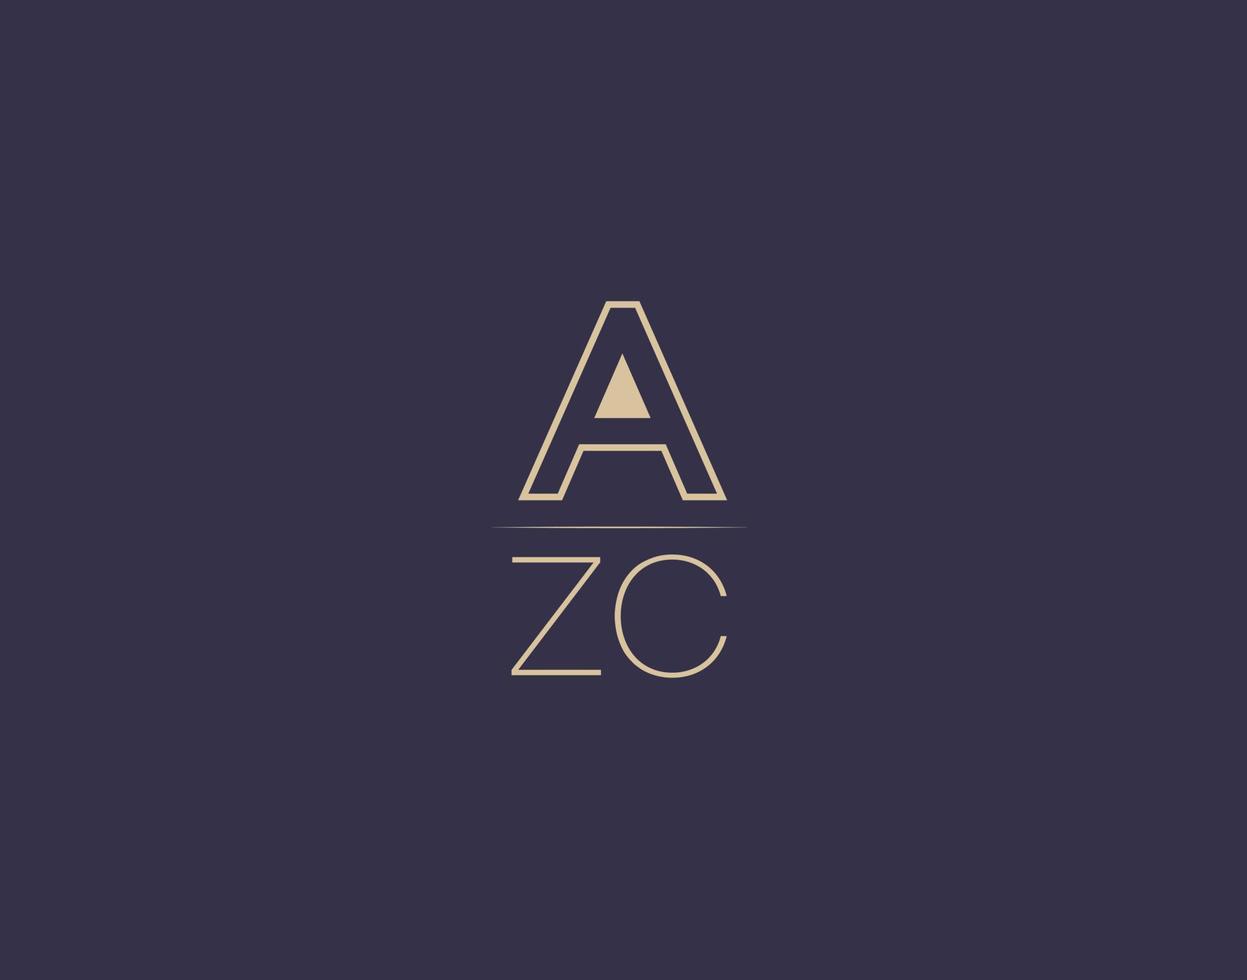 azc brev logotyp design modern minimalistisk vektor bilder